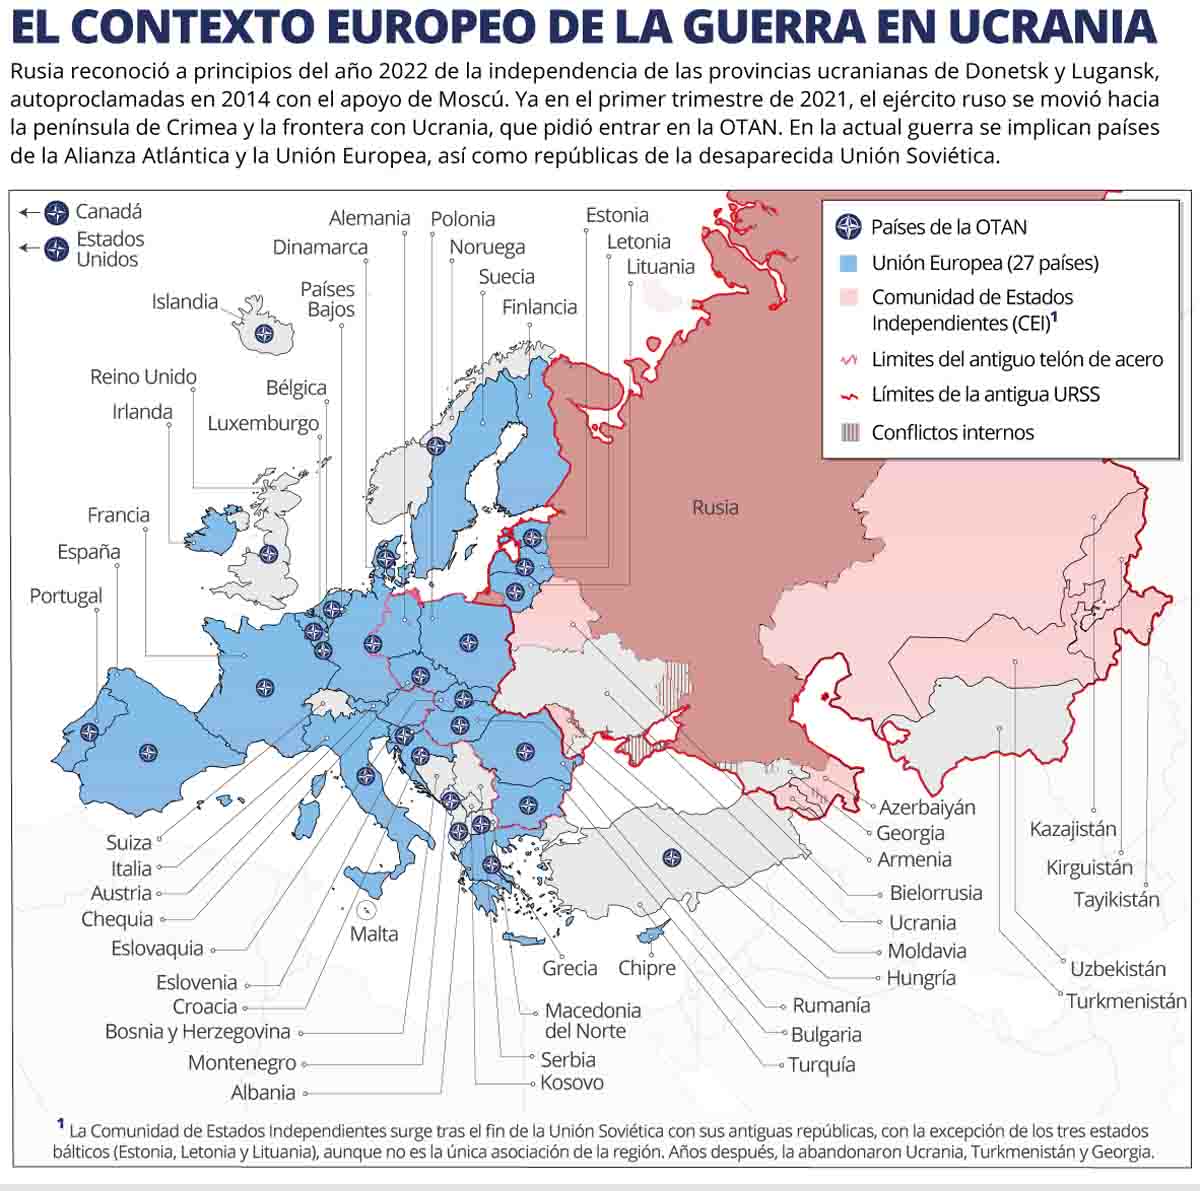 mapas-para-entender-el-contexto-de-la-guerra-en-ucrania